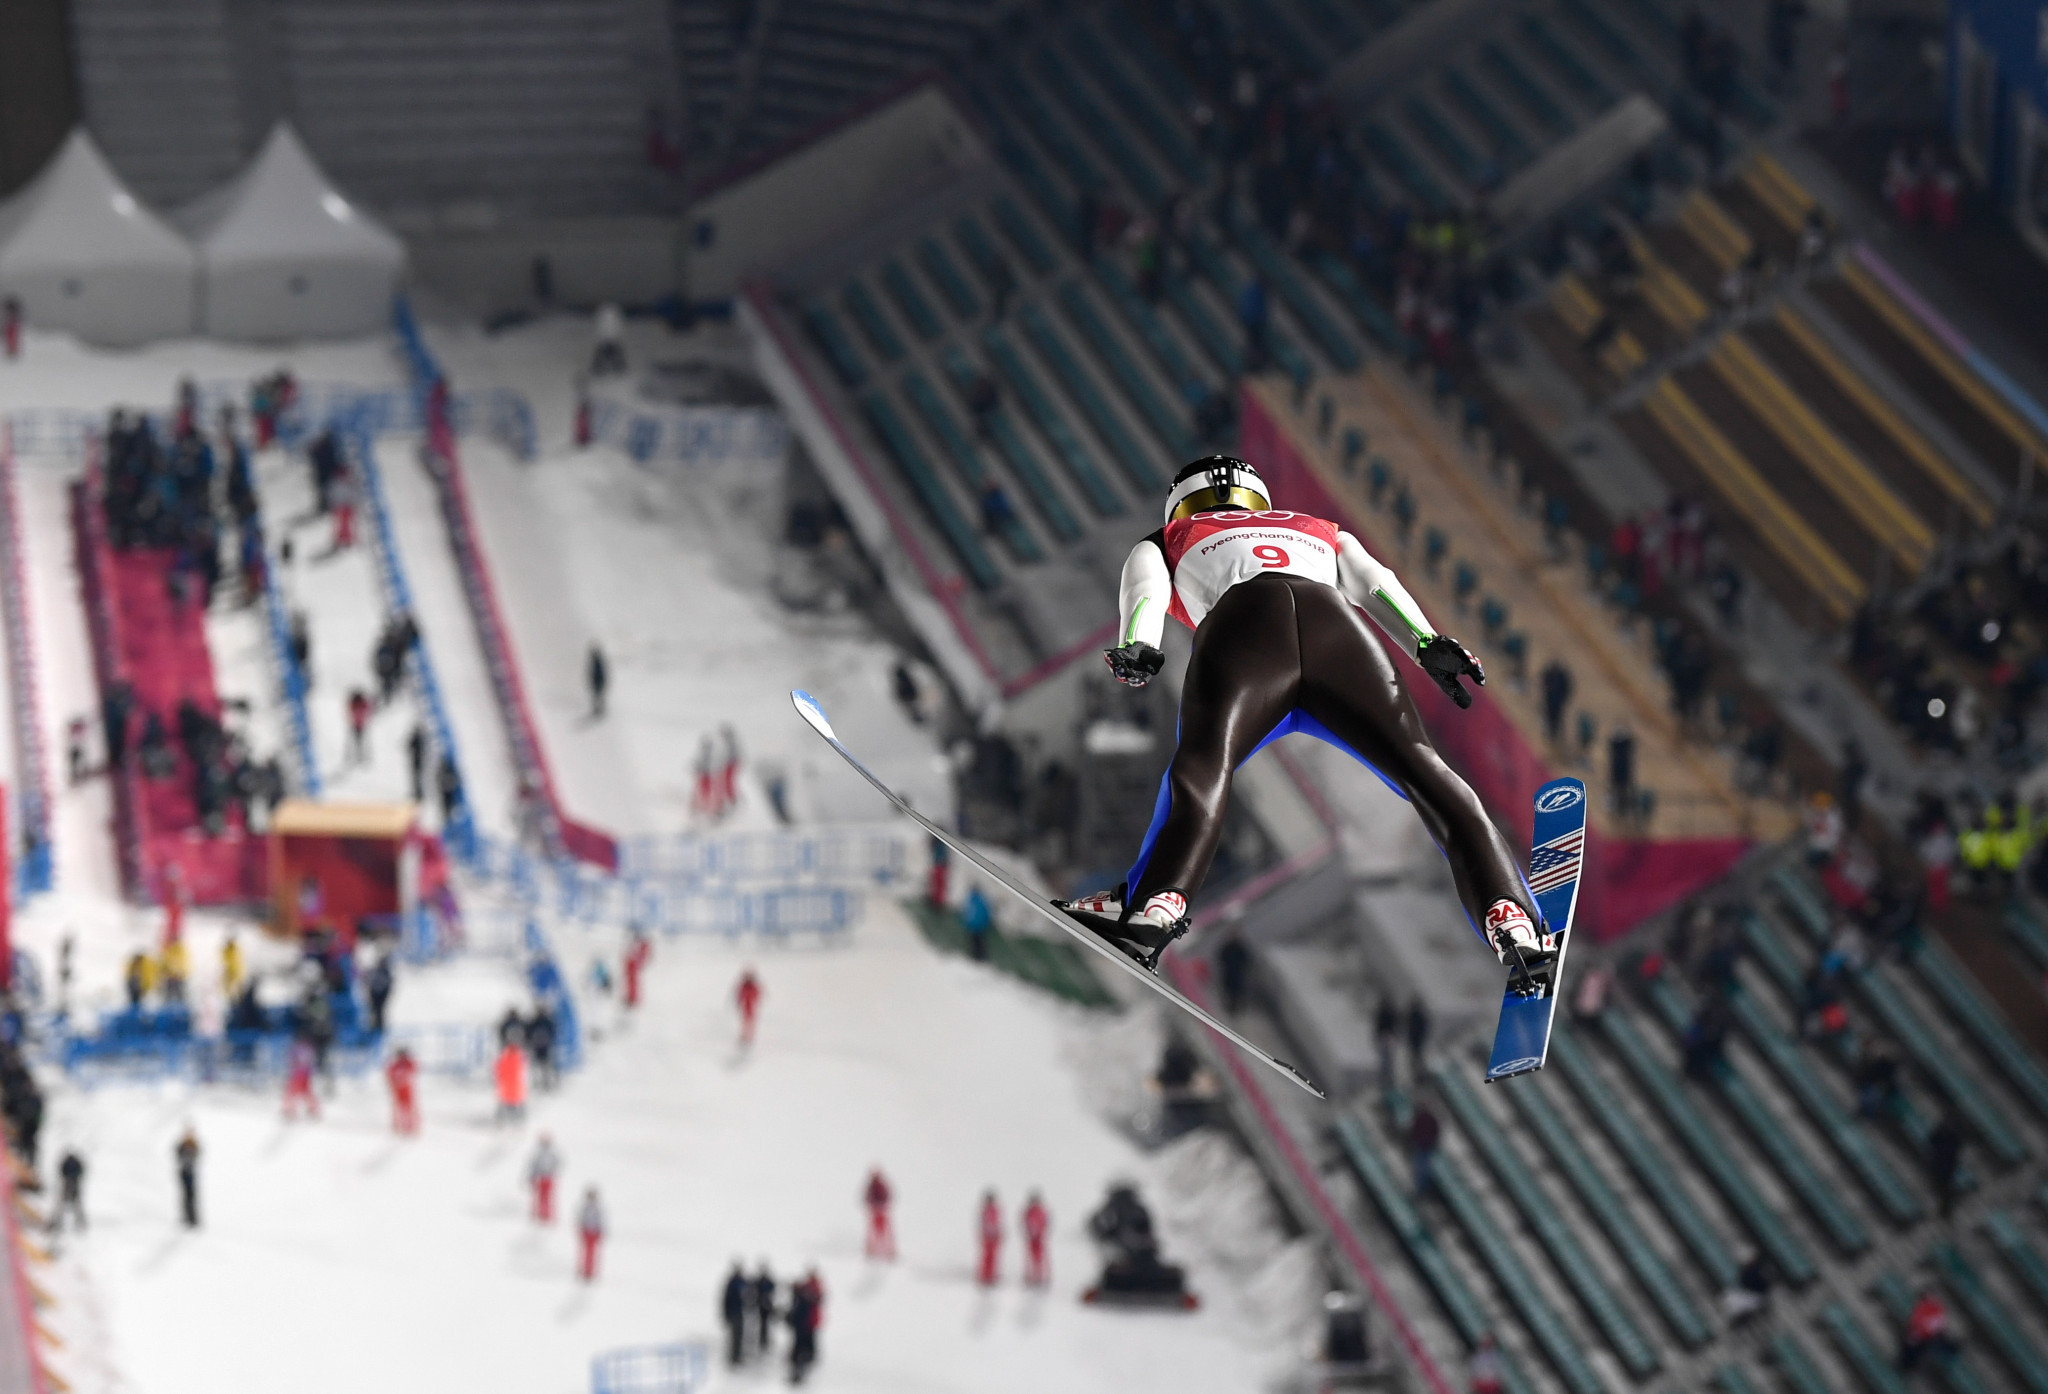 Ski jumping qualification has begun today at Pyeongchang 2018 ©Getty Images